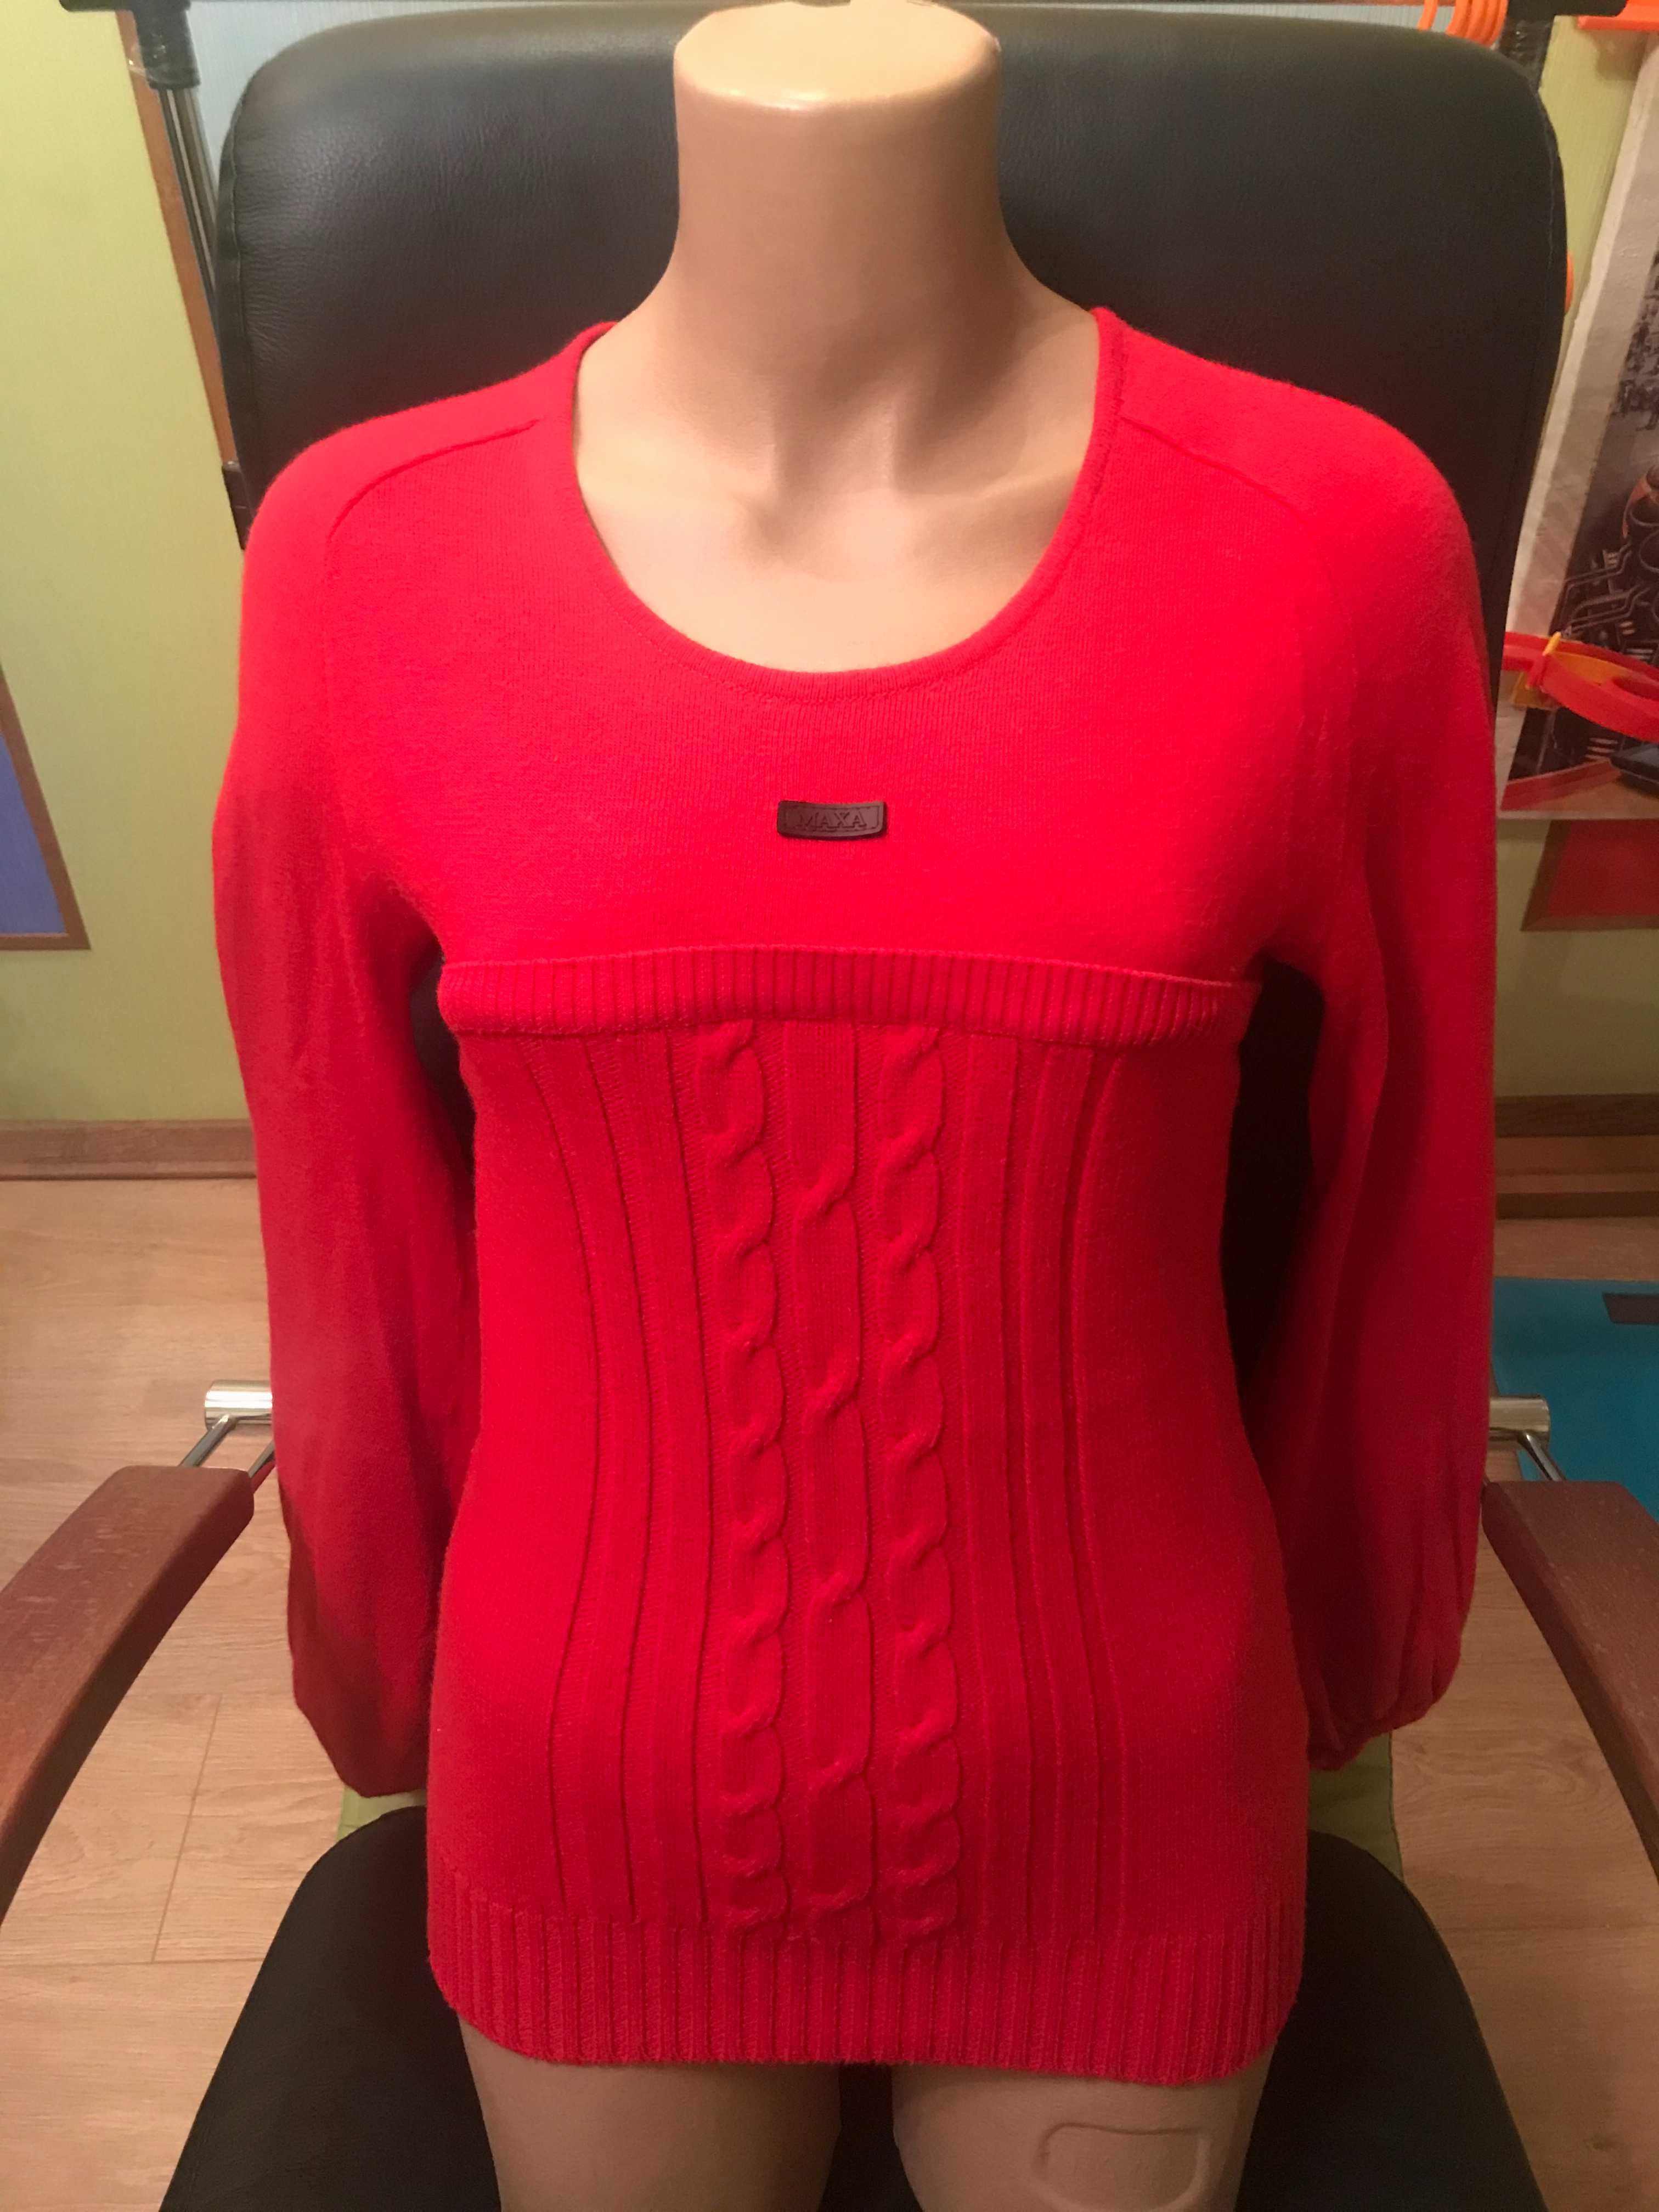 Красный свитер МАХА. Размер S-M.